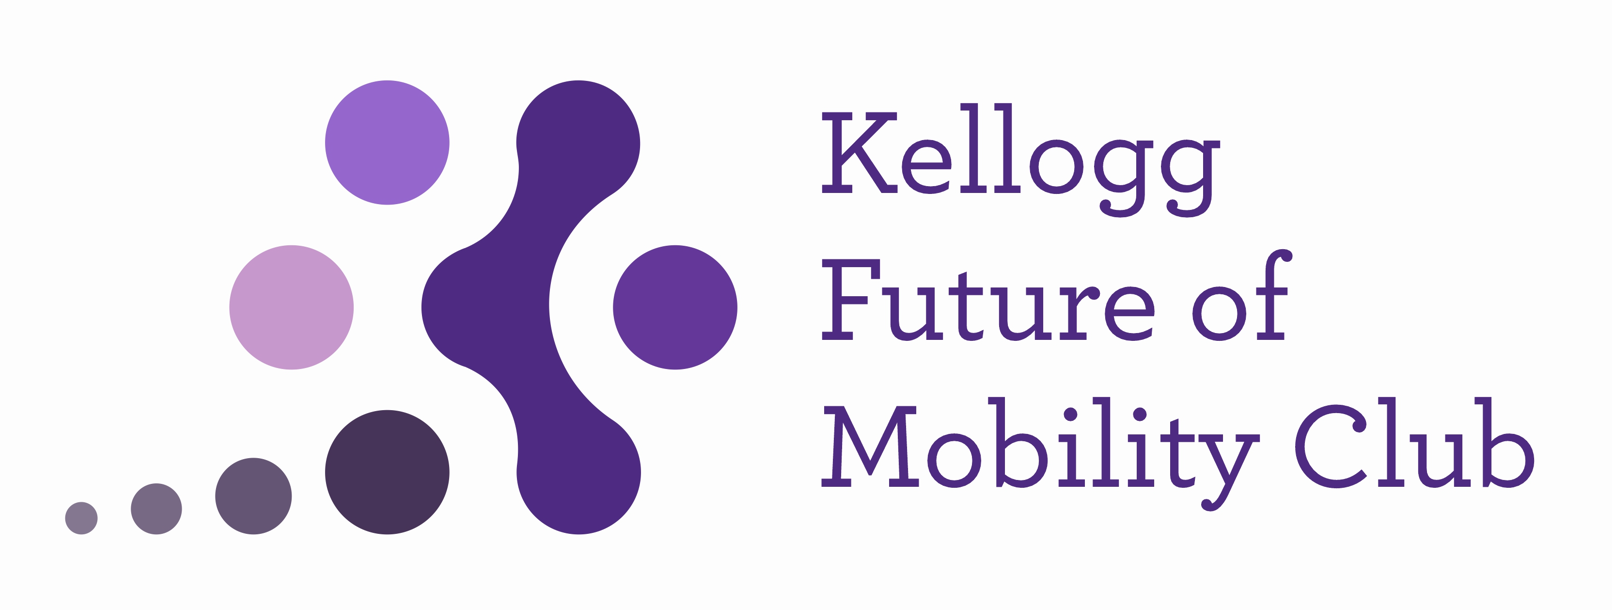 Kellogg Future of Mobility club logo